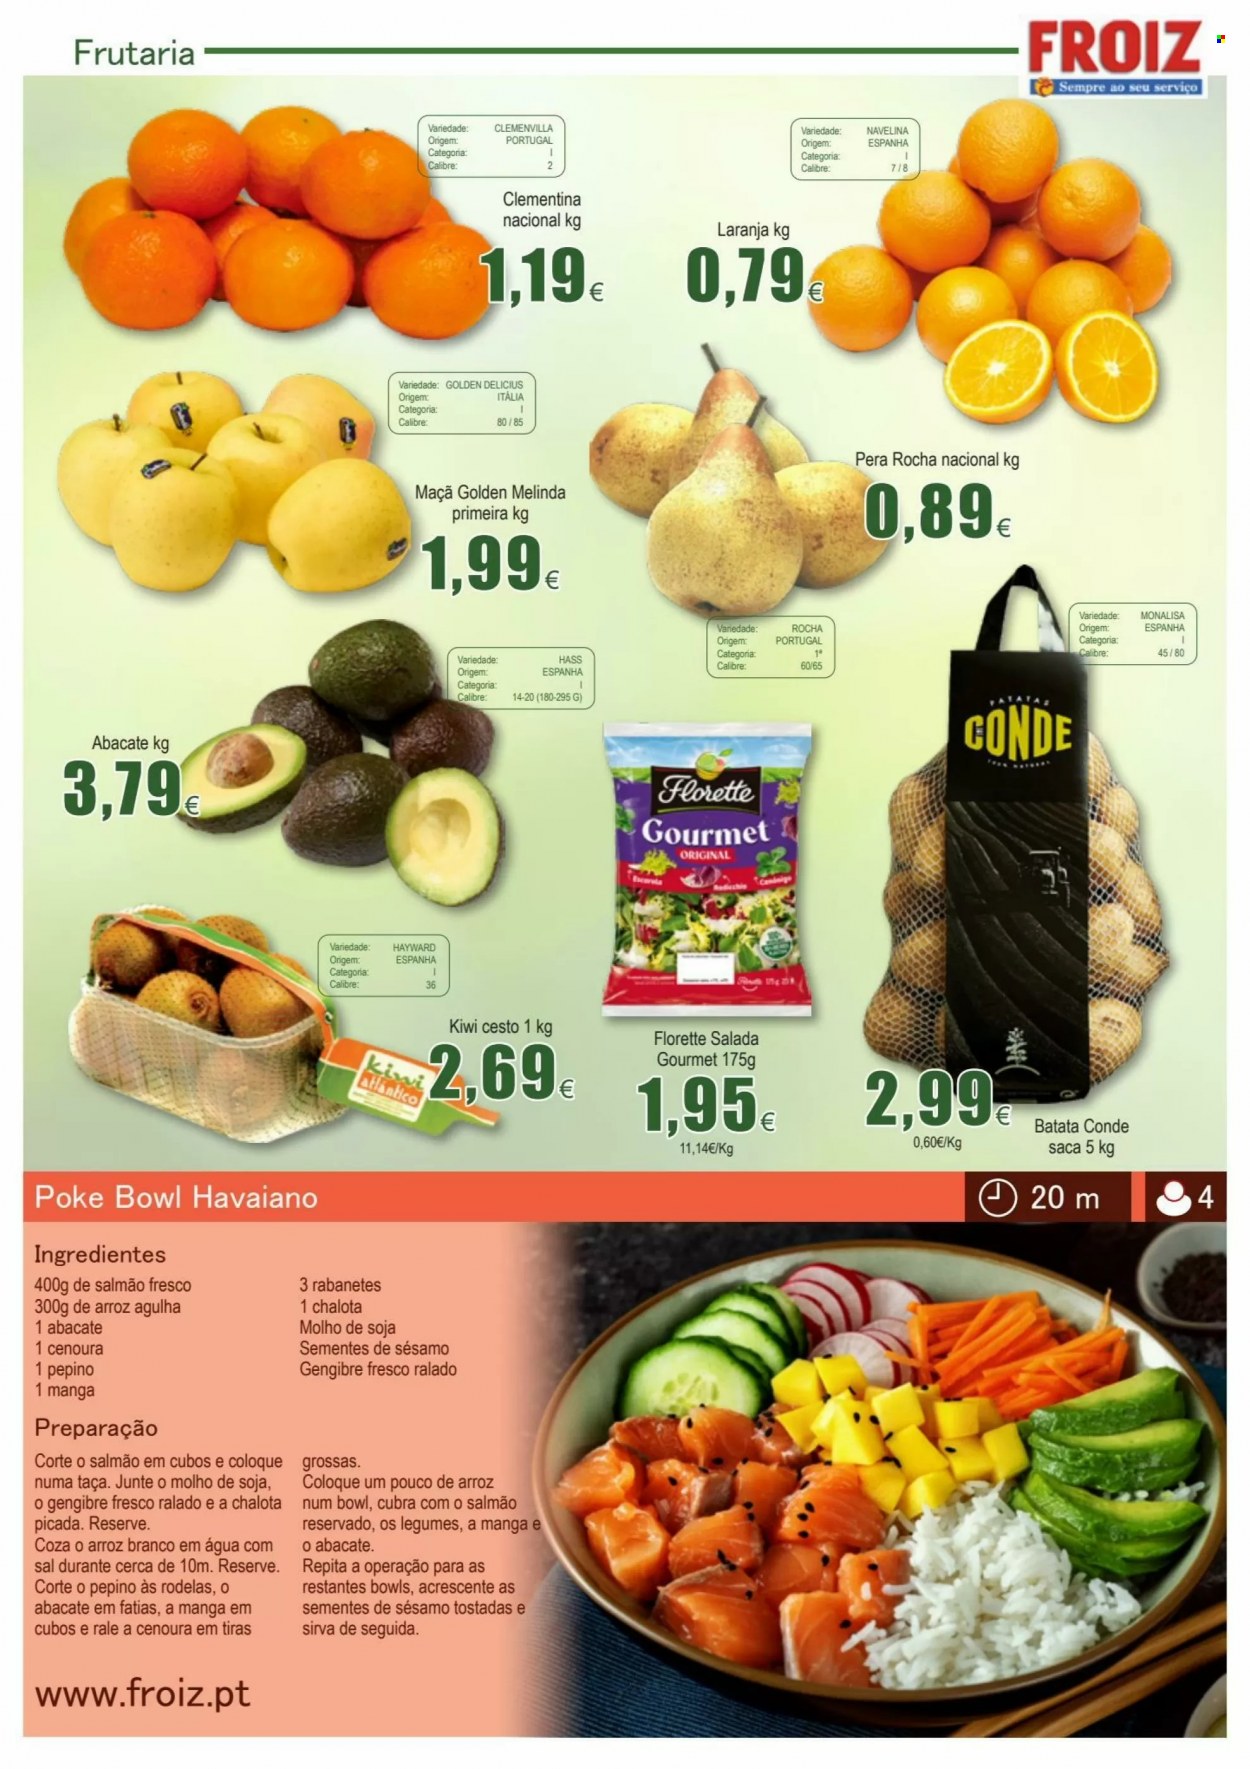 thumbnail - Folheto Froiz - 7.1.2022 - 26.1.2022 - Produtos em promoção - maçã, pera, kiwi, laranja, clementinas, batata, sementes de sésamo, arroz branco, água, cesta, taça. Página 2.